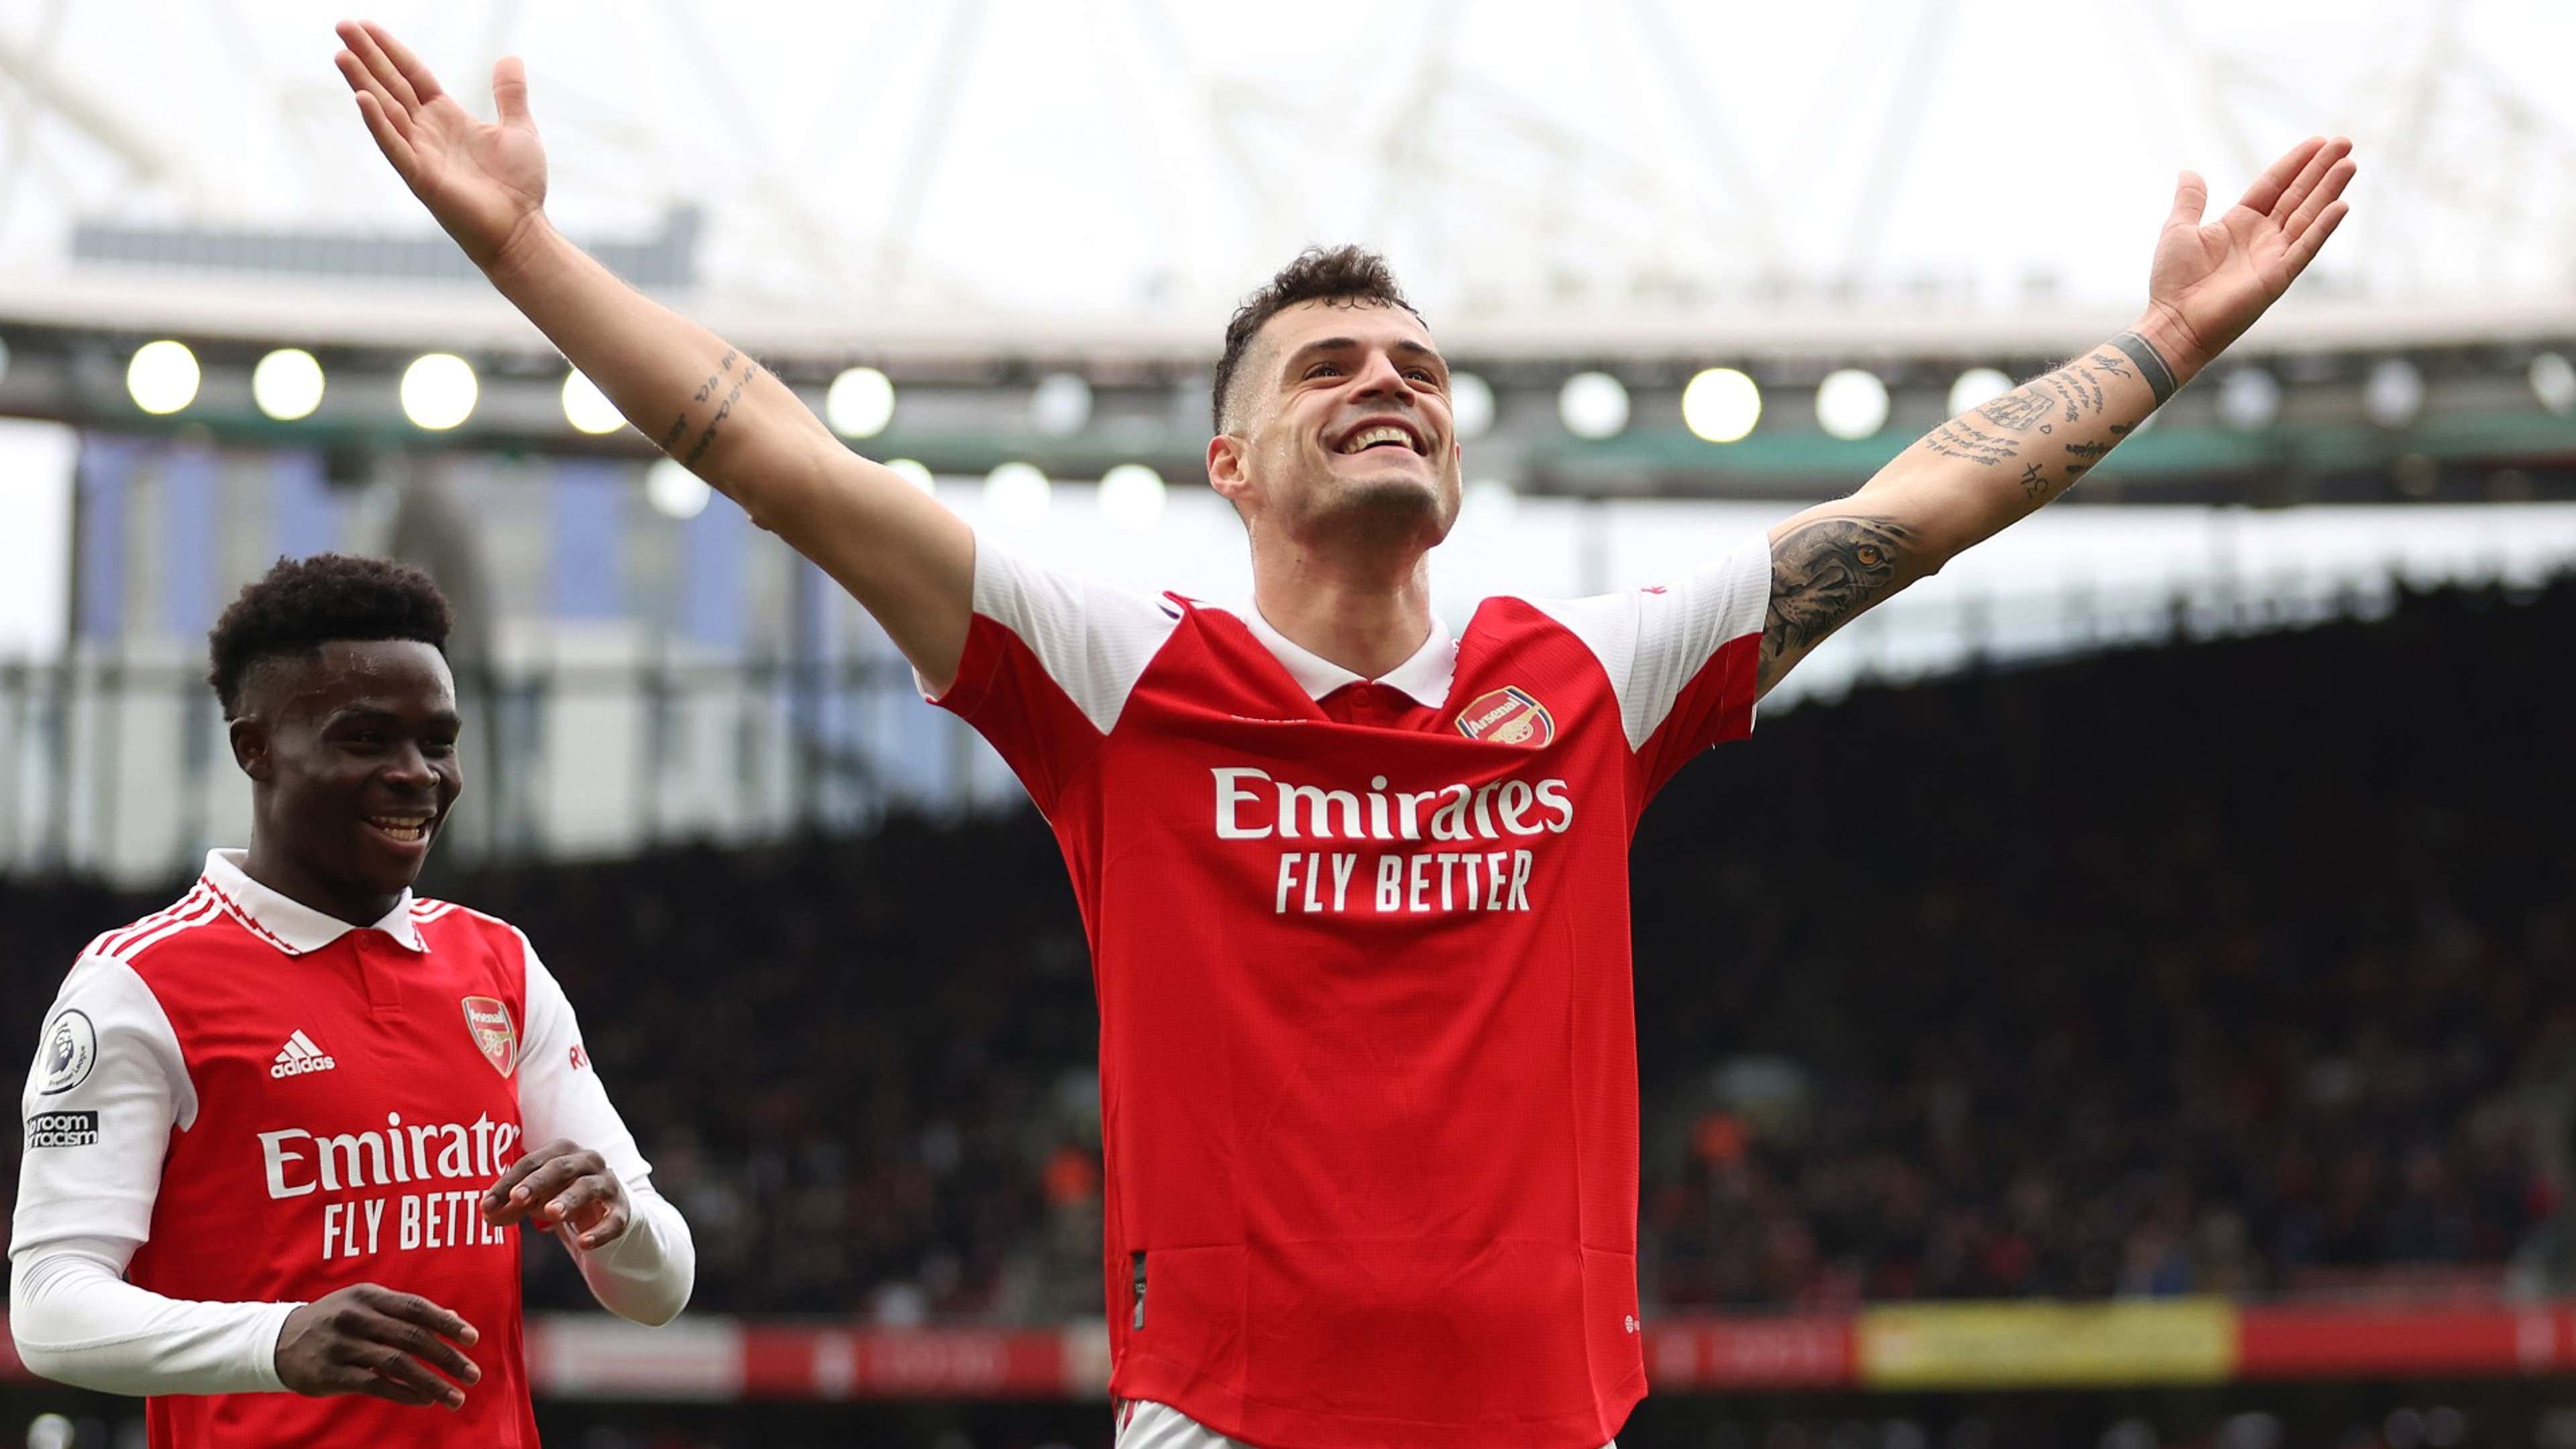 Arsenal News - Héctor Bellerín on Instagram story, with Granit